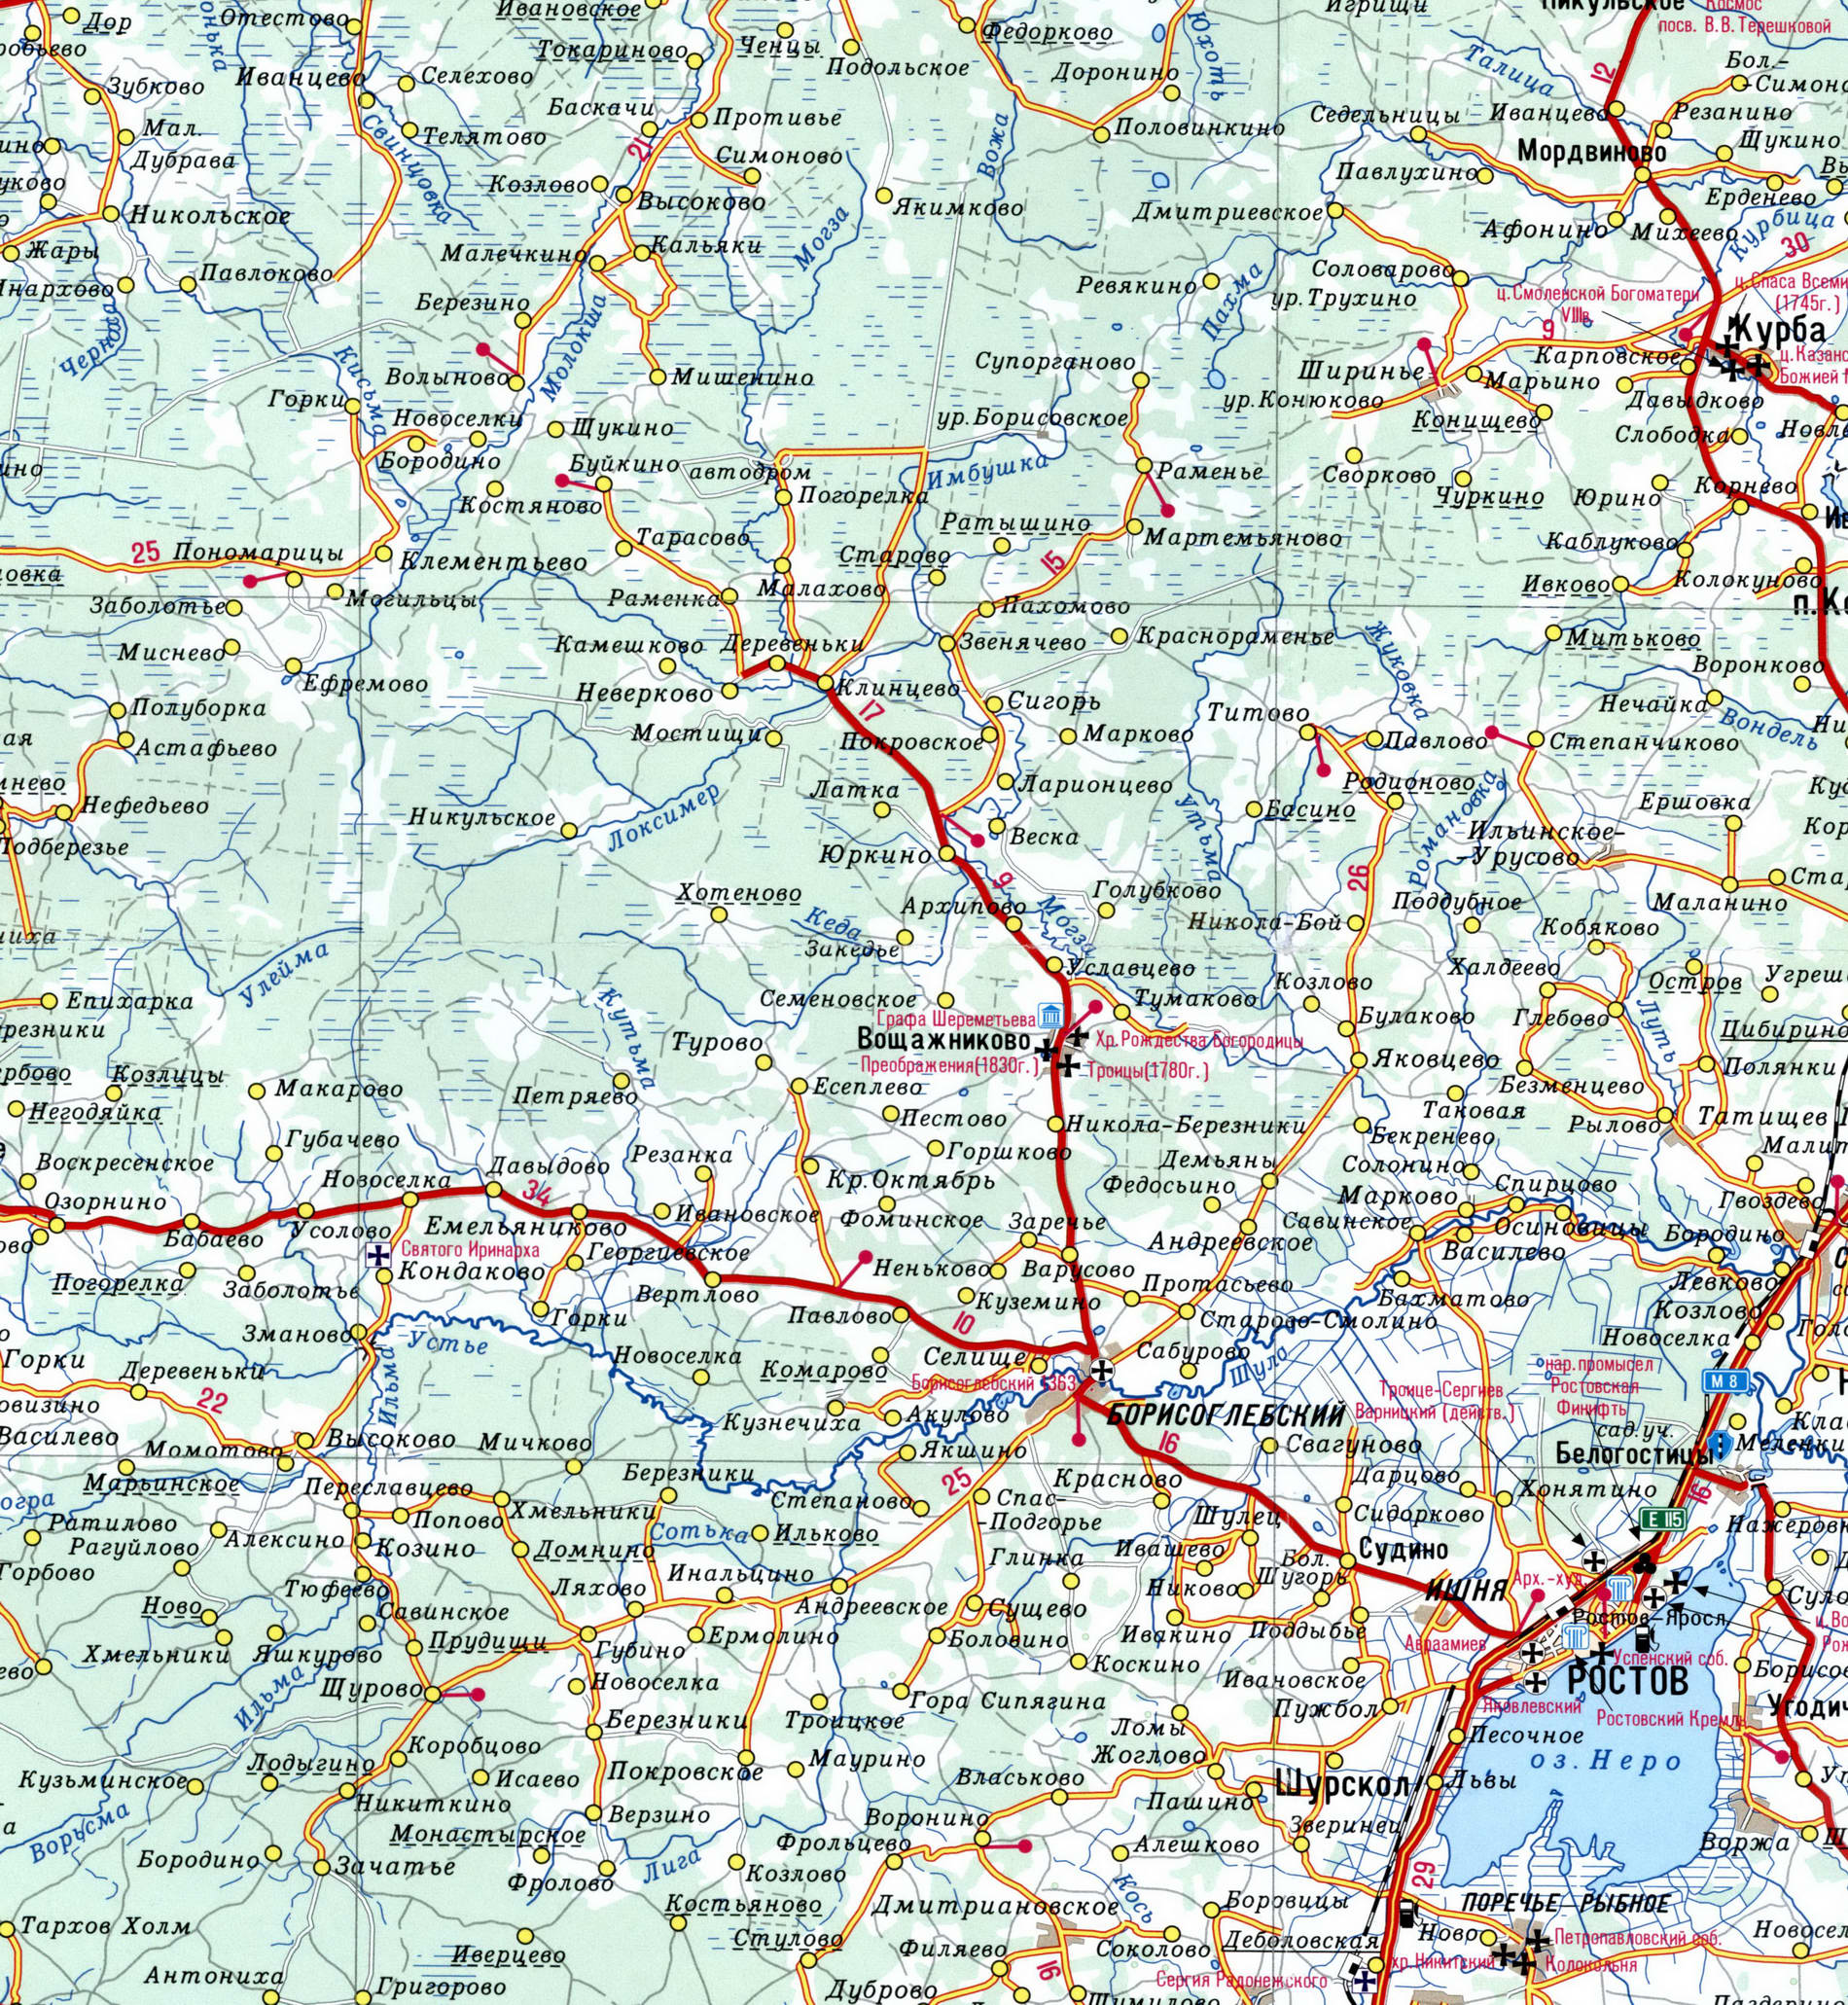 Карта борисоглебска воронежской